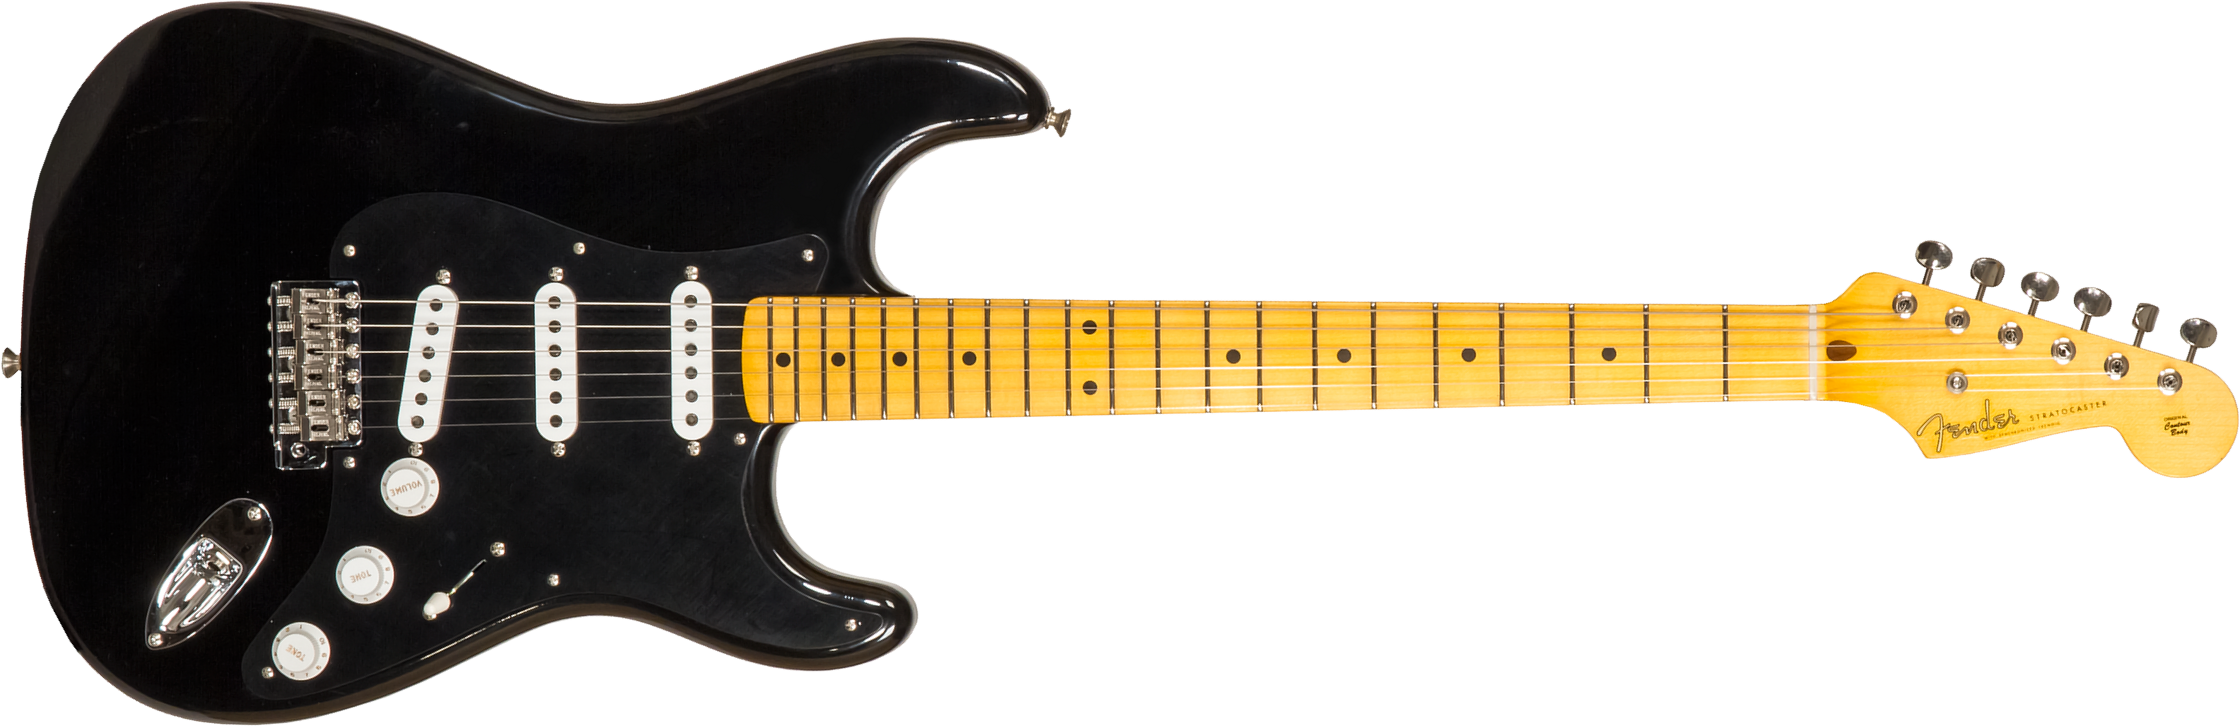 Fender Custom Shop Strat 1955 3s Trem Mn #r127877 - Closet Classic Black - Elektrische gitaar in Str-vorm - Main picture